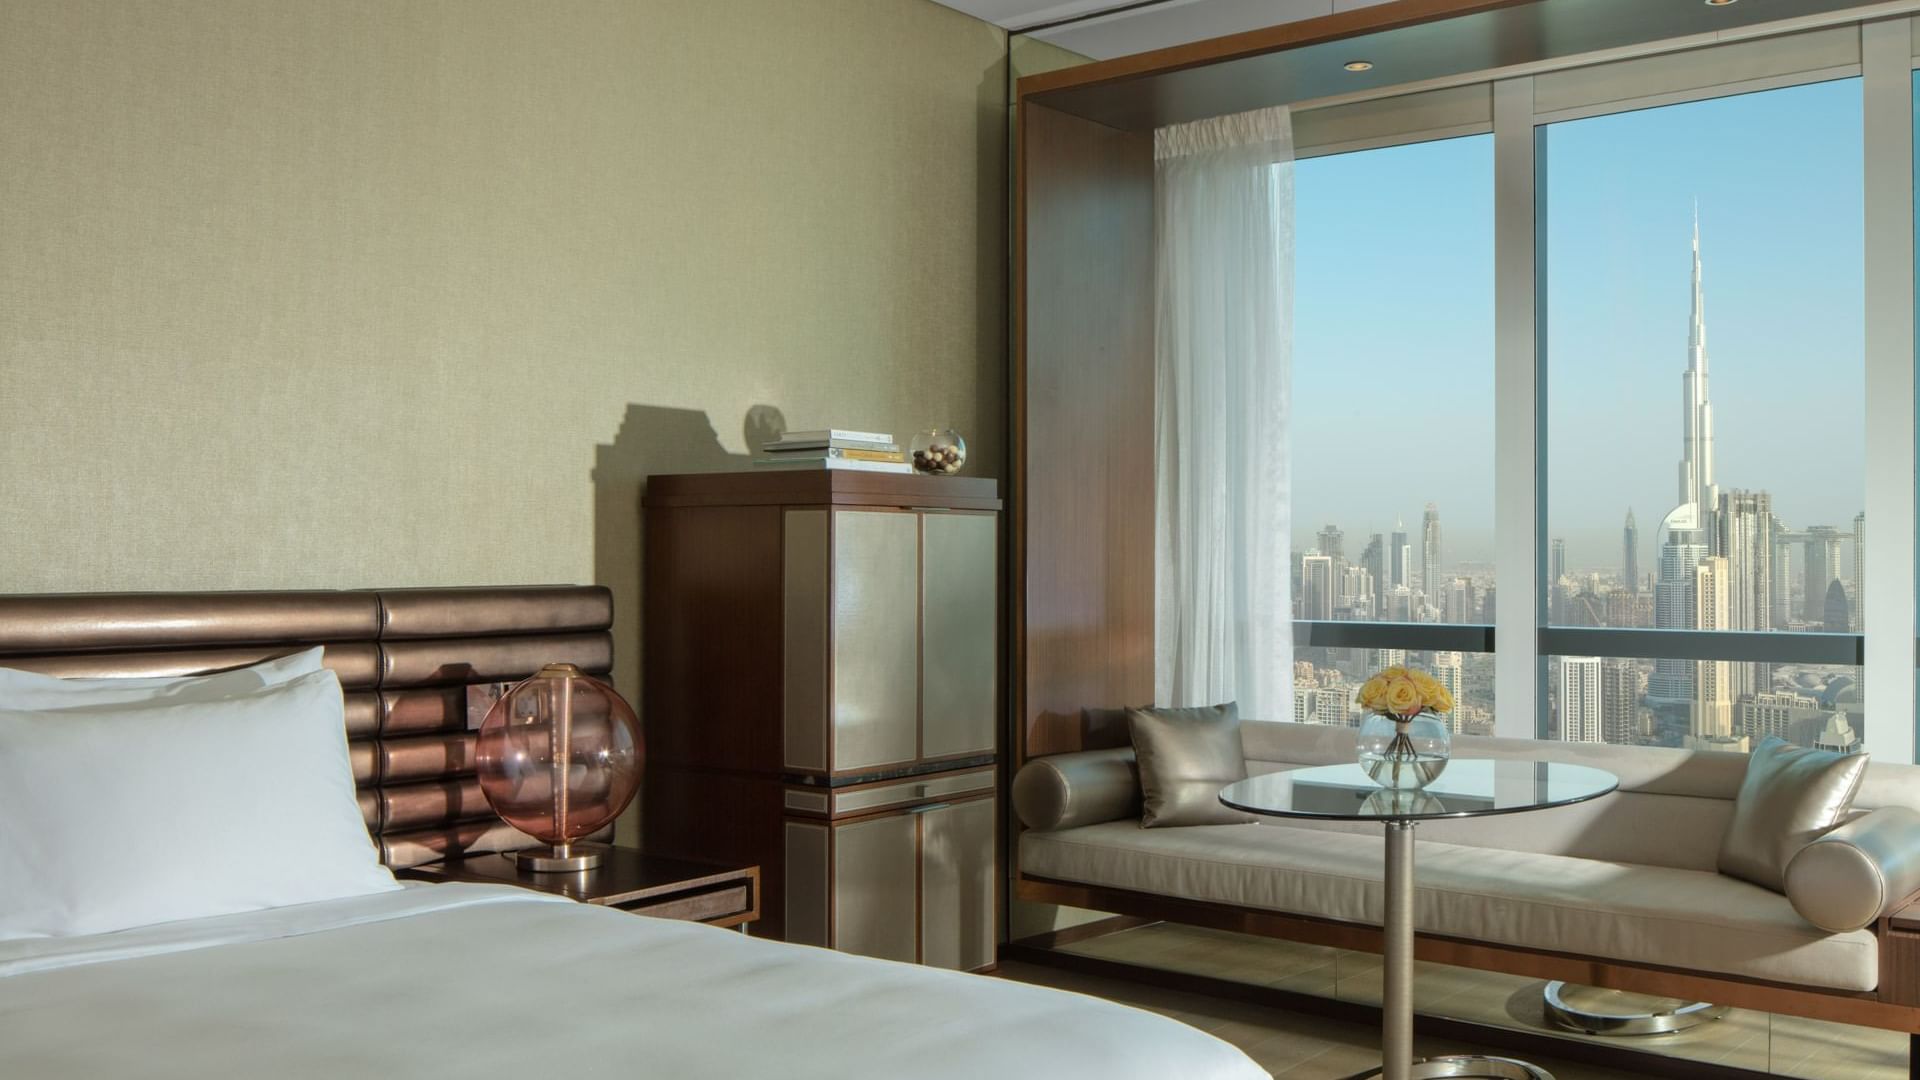 Interior of Scene Room with city views at Paramount Hotel Dubai